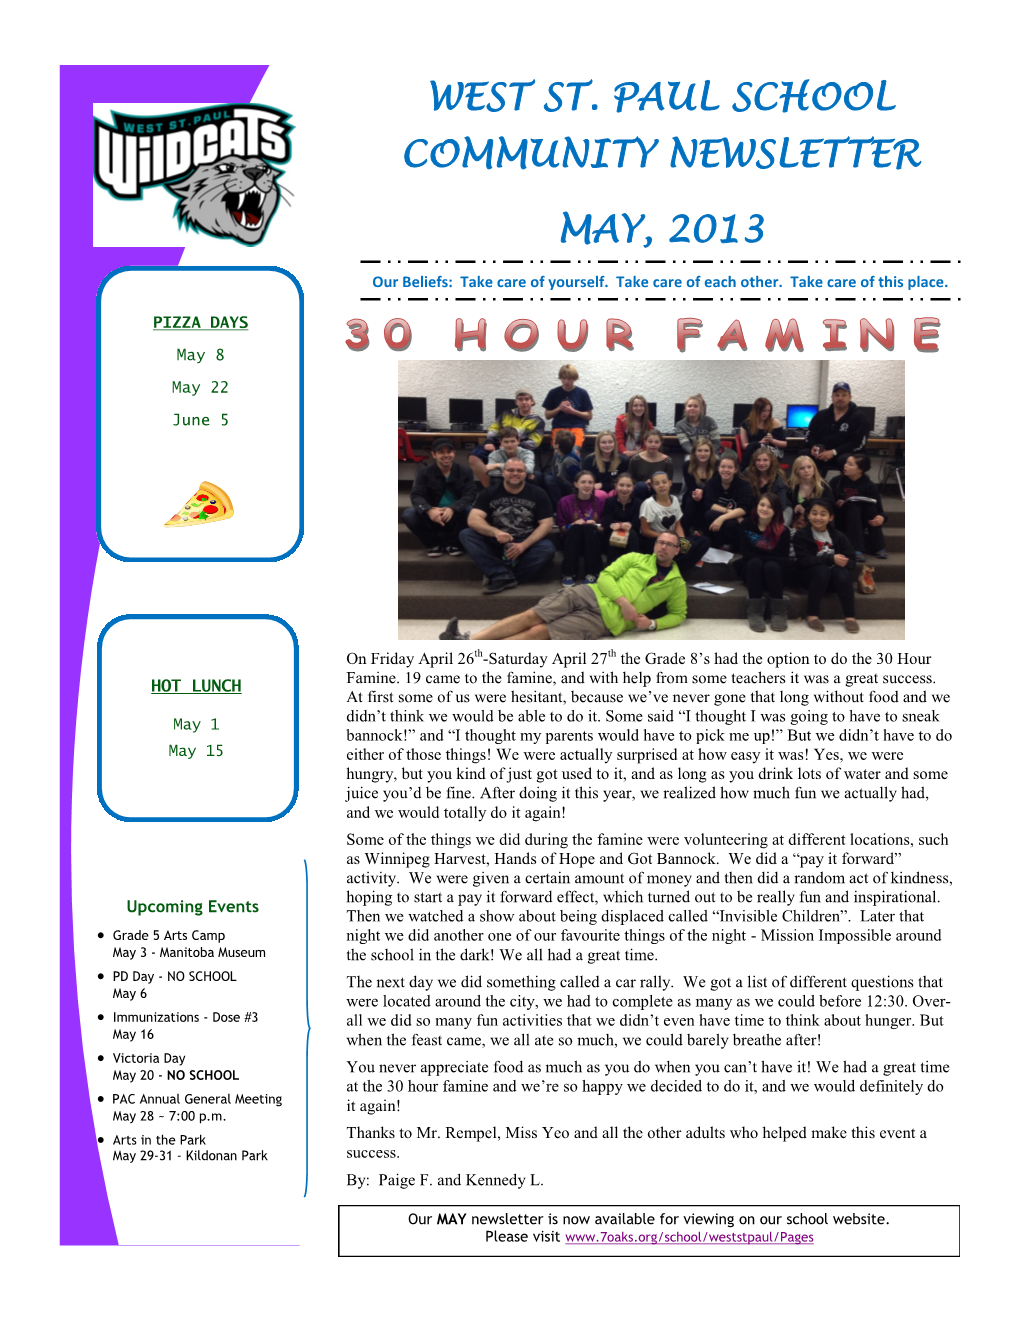 West St. Paul School Community Newsletter May